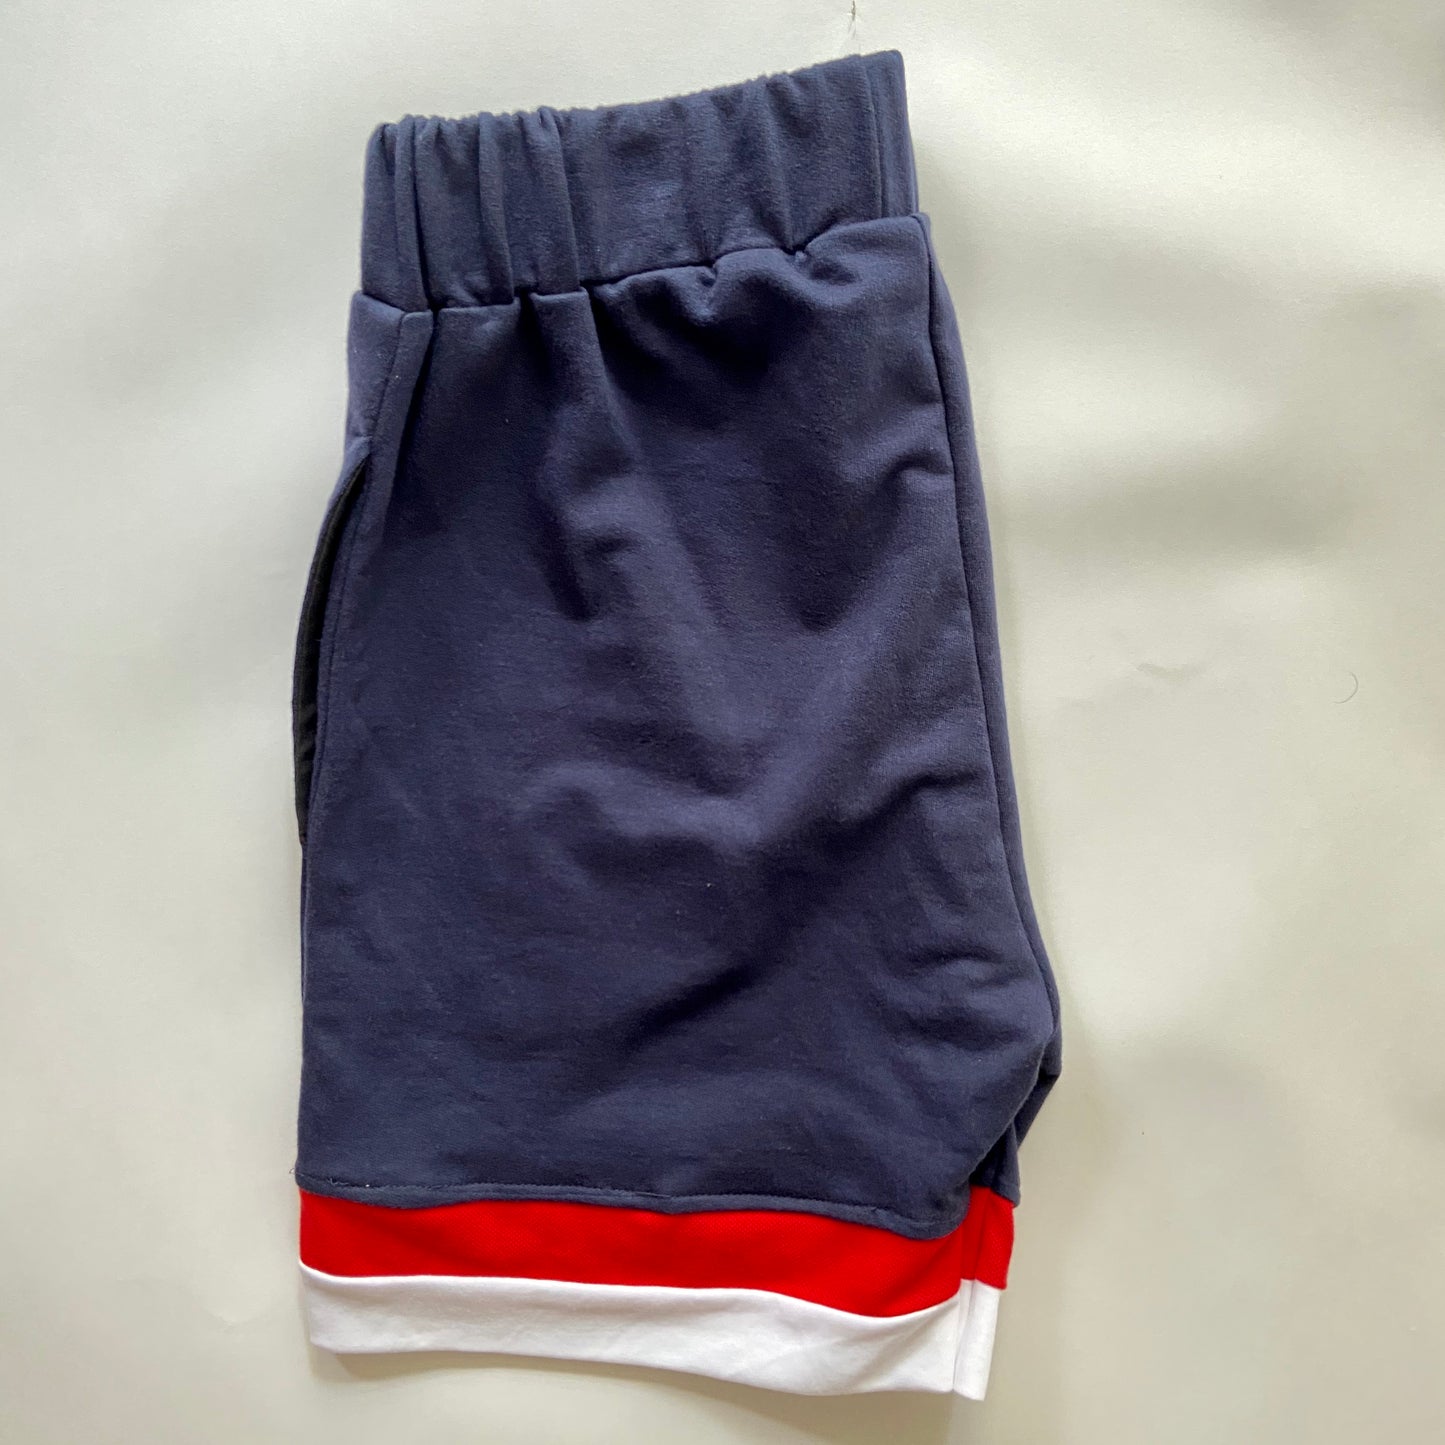 Navy shorts detailed